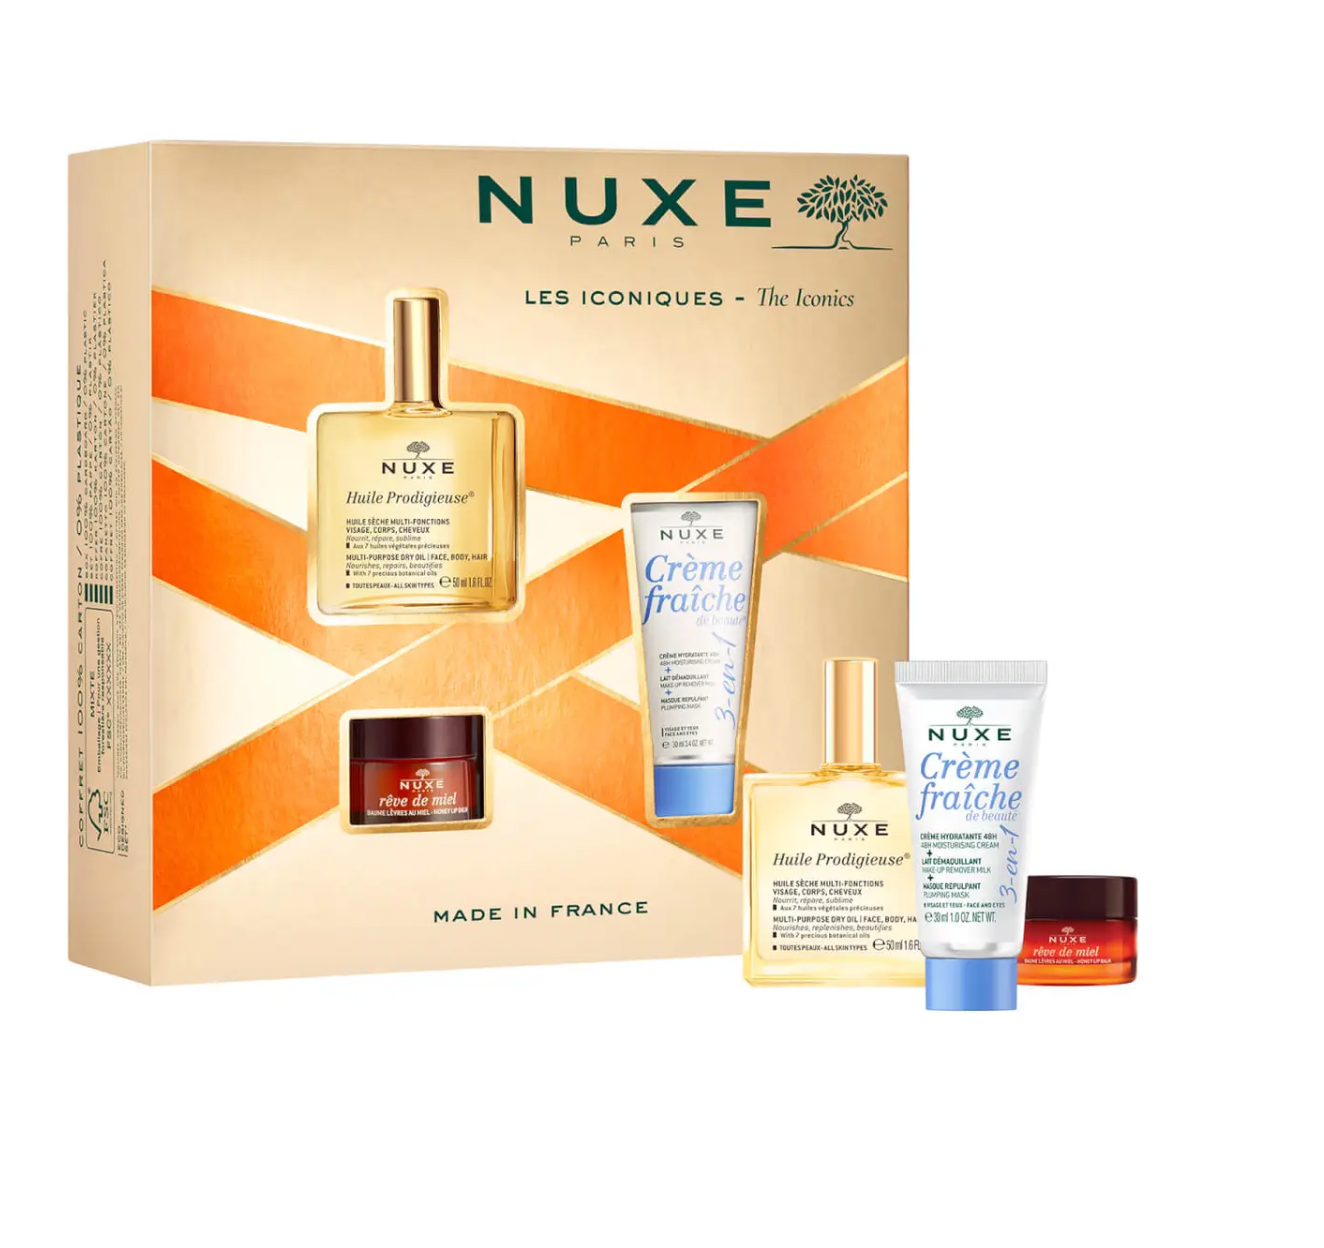 Nuxe "The Iconics" Gift Set